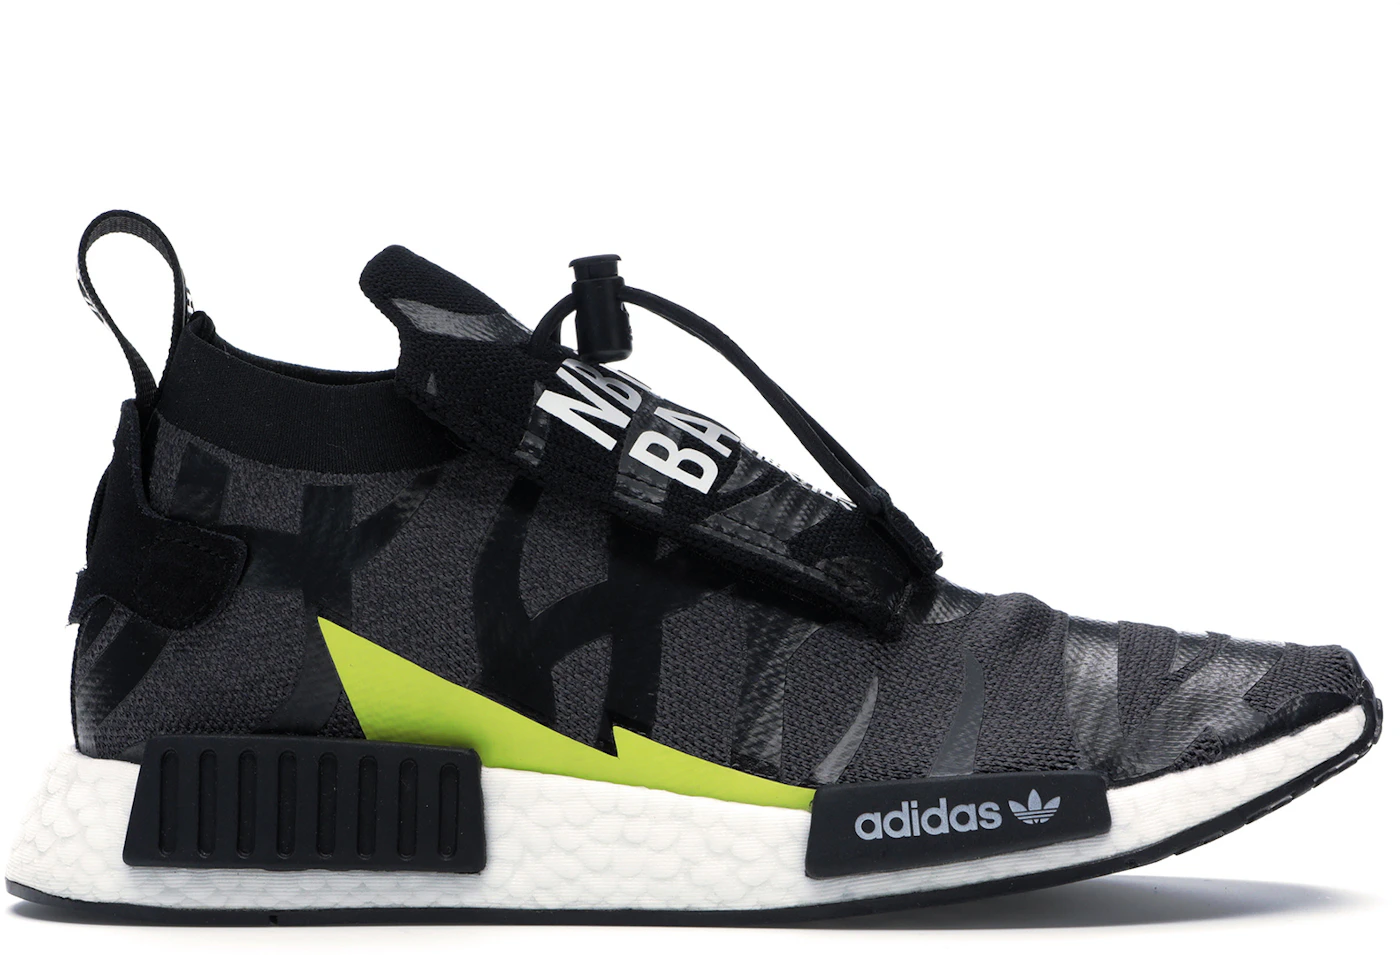 Adidas NMD R1 Custom Black 'Bape OG' Edition